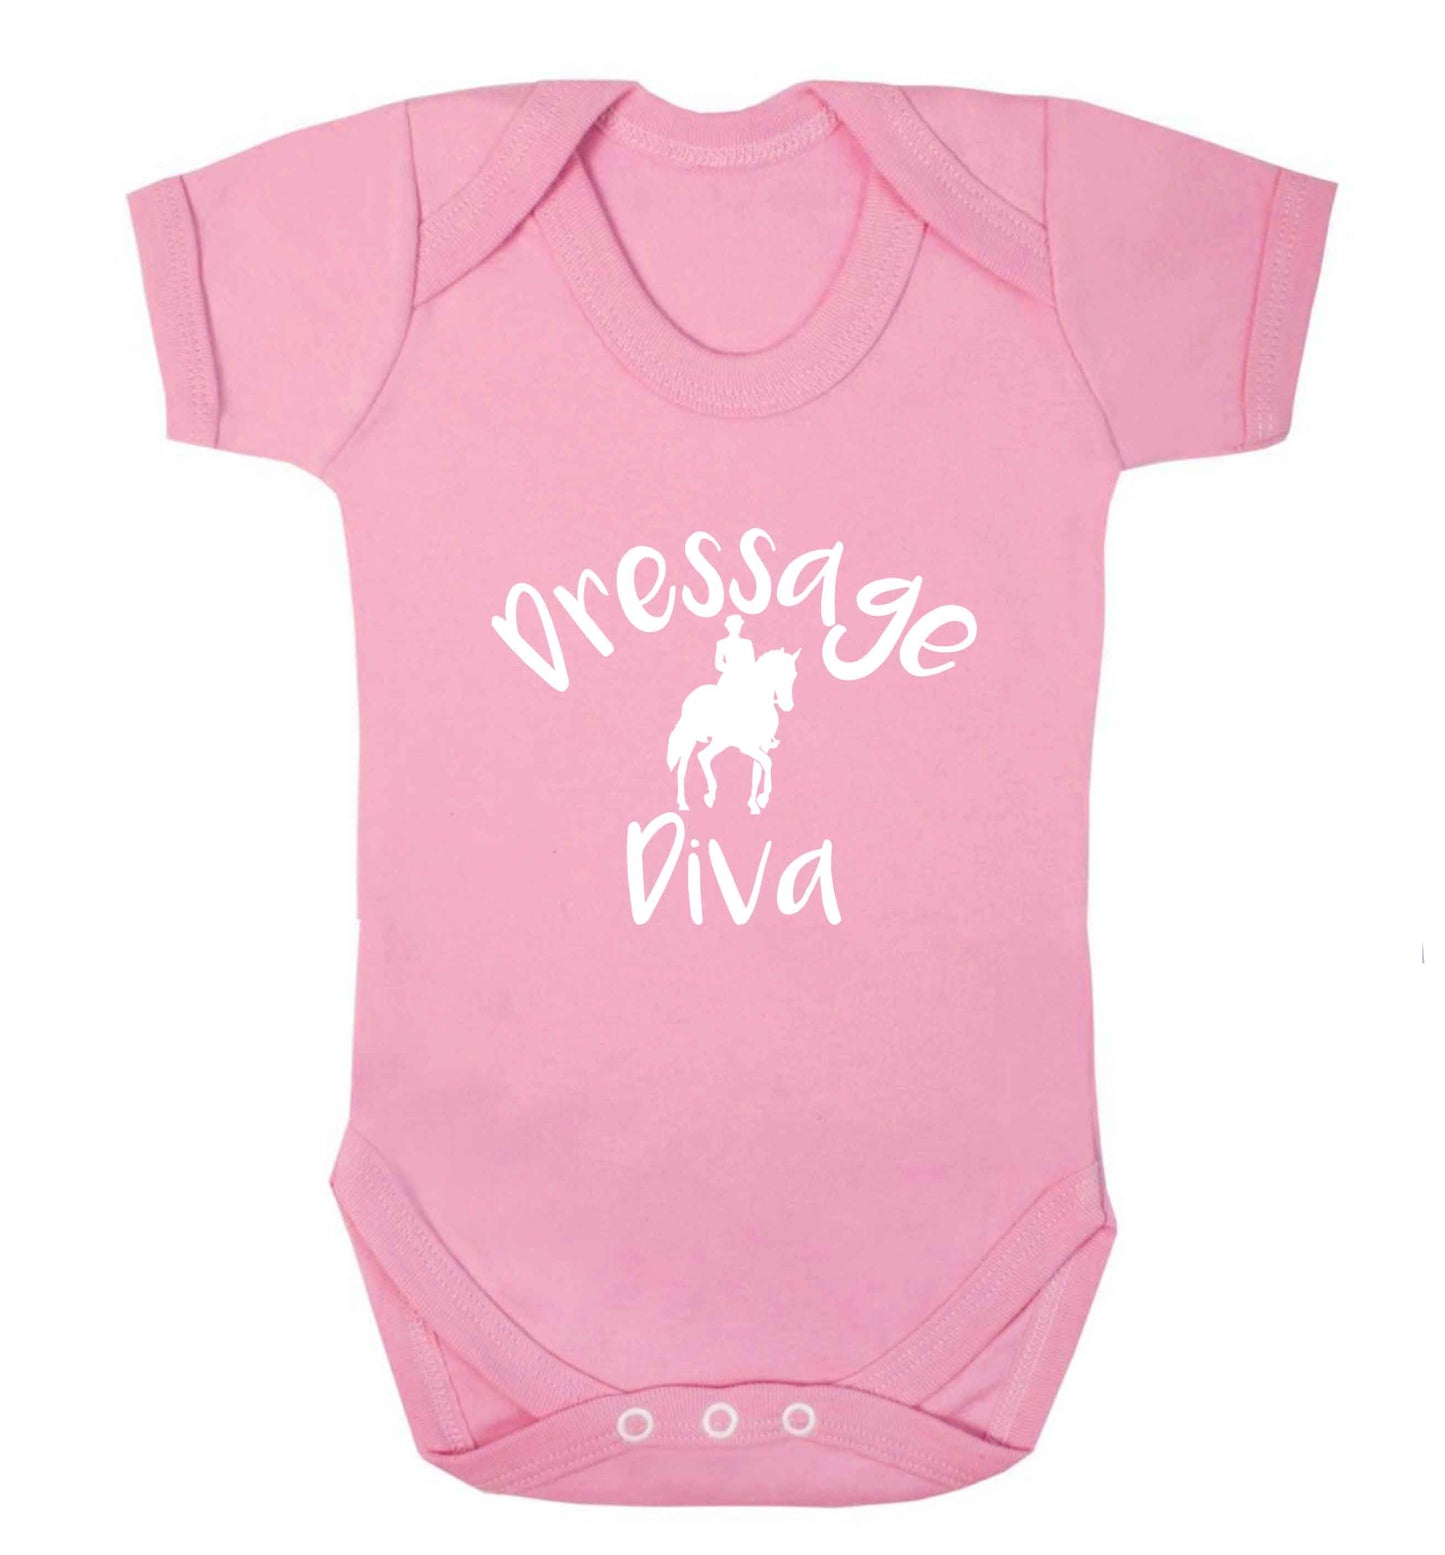 Dressage diva baby vest pale pink 18-24 months